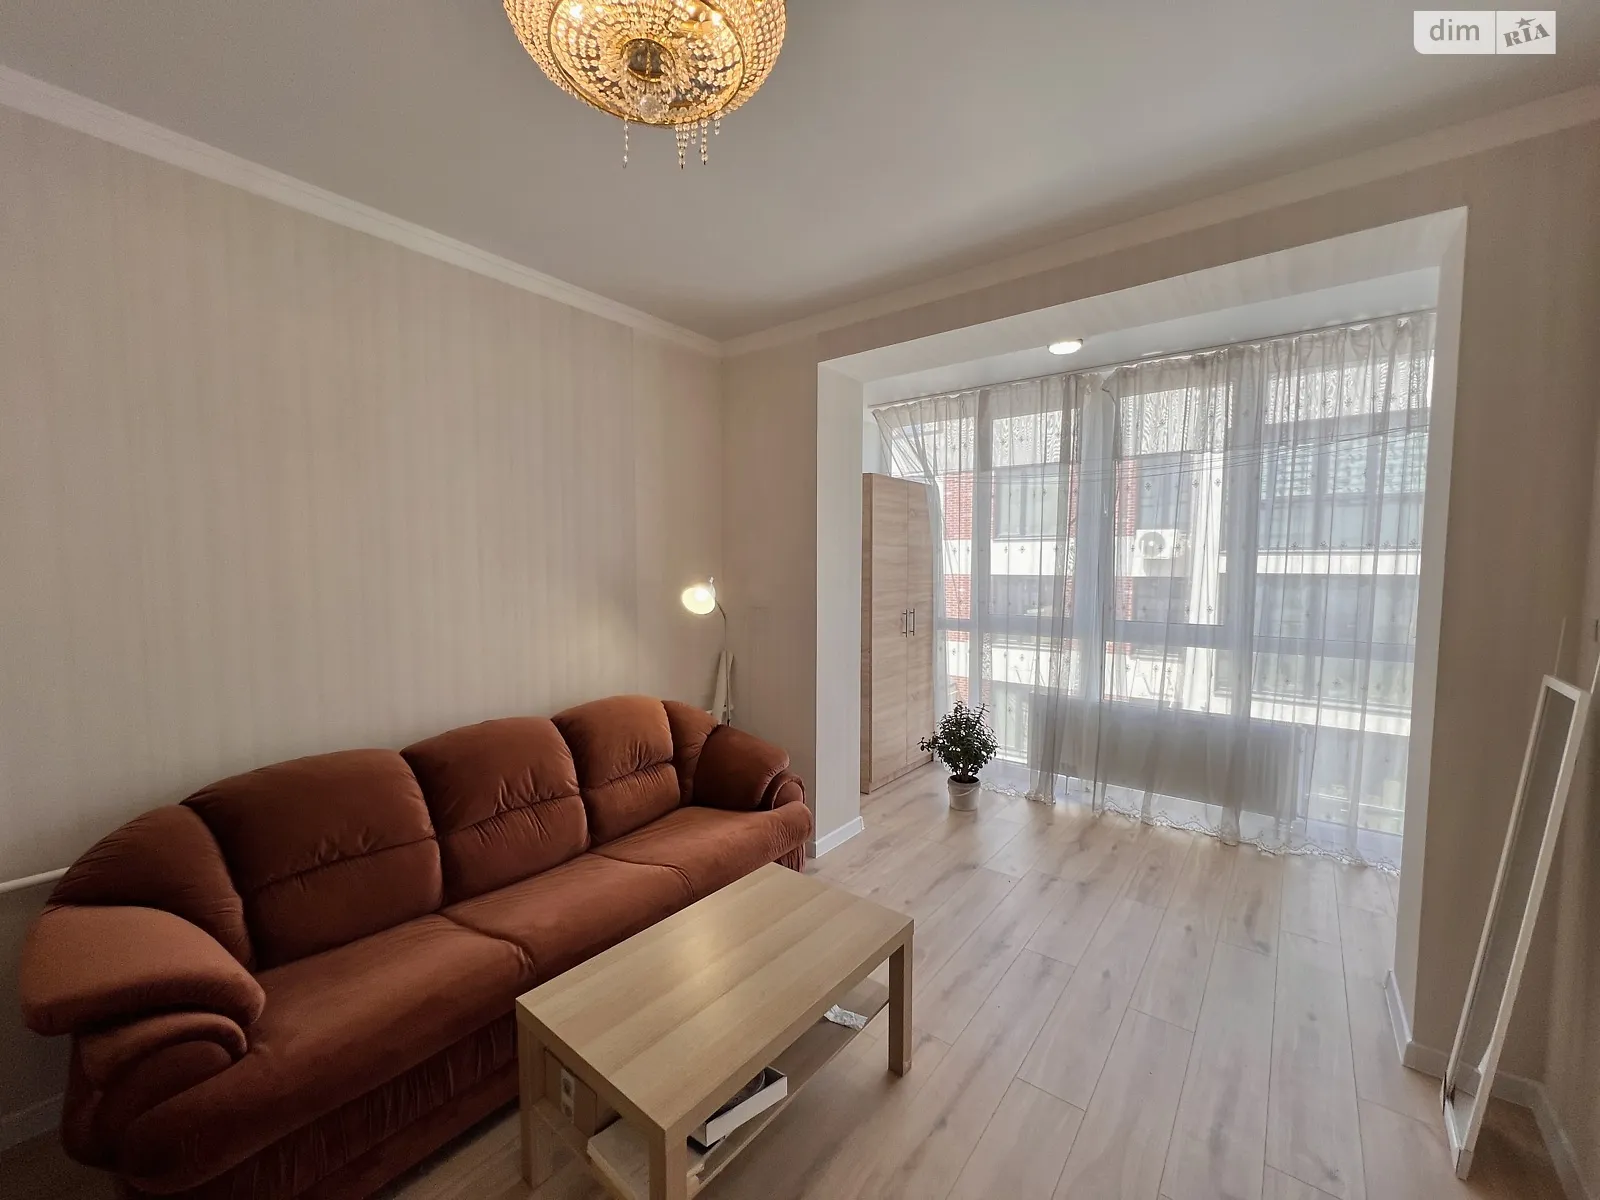 Продается 1-комнатная квартира 45.9 кв. м в Гостомеле, цена: 45900 $ - фото 1